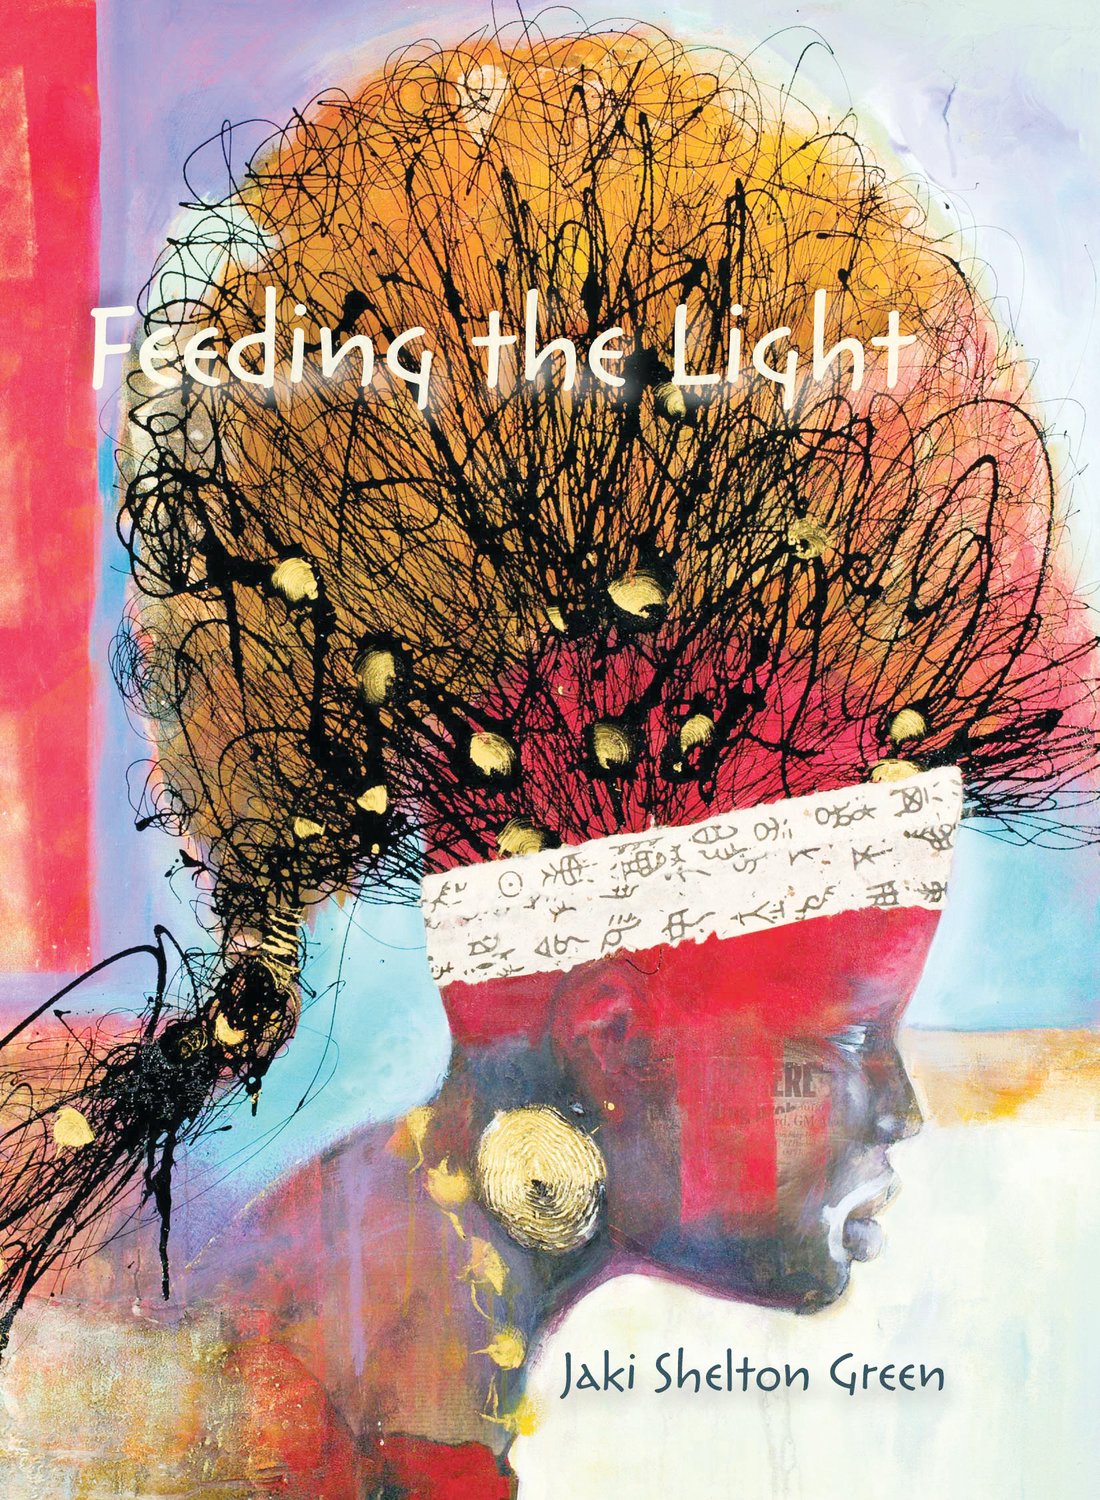 ‘Feeding The Light’ by Jaki Shelton Green